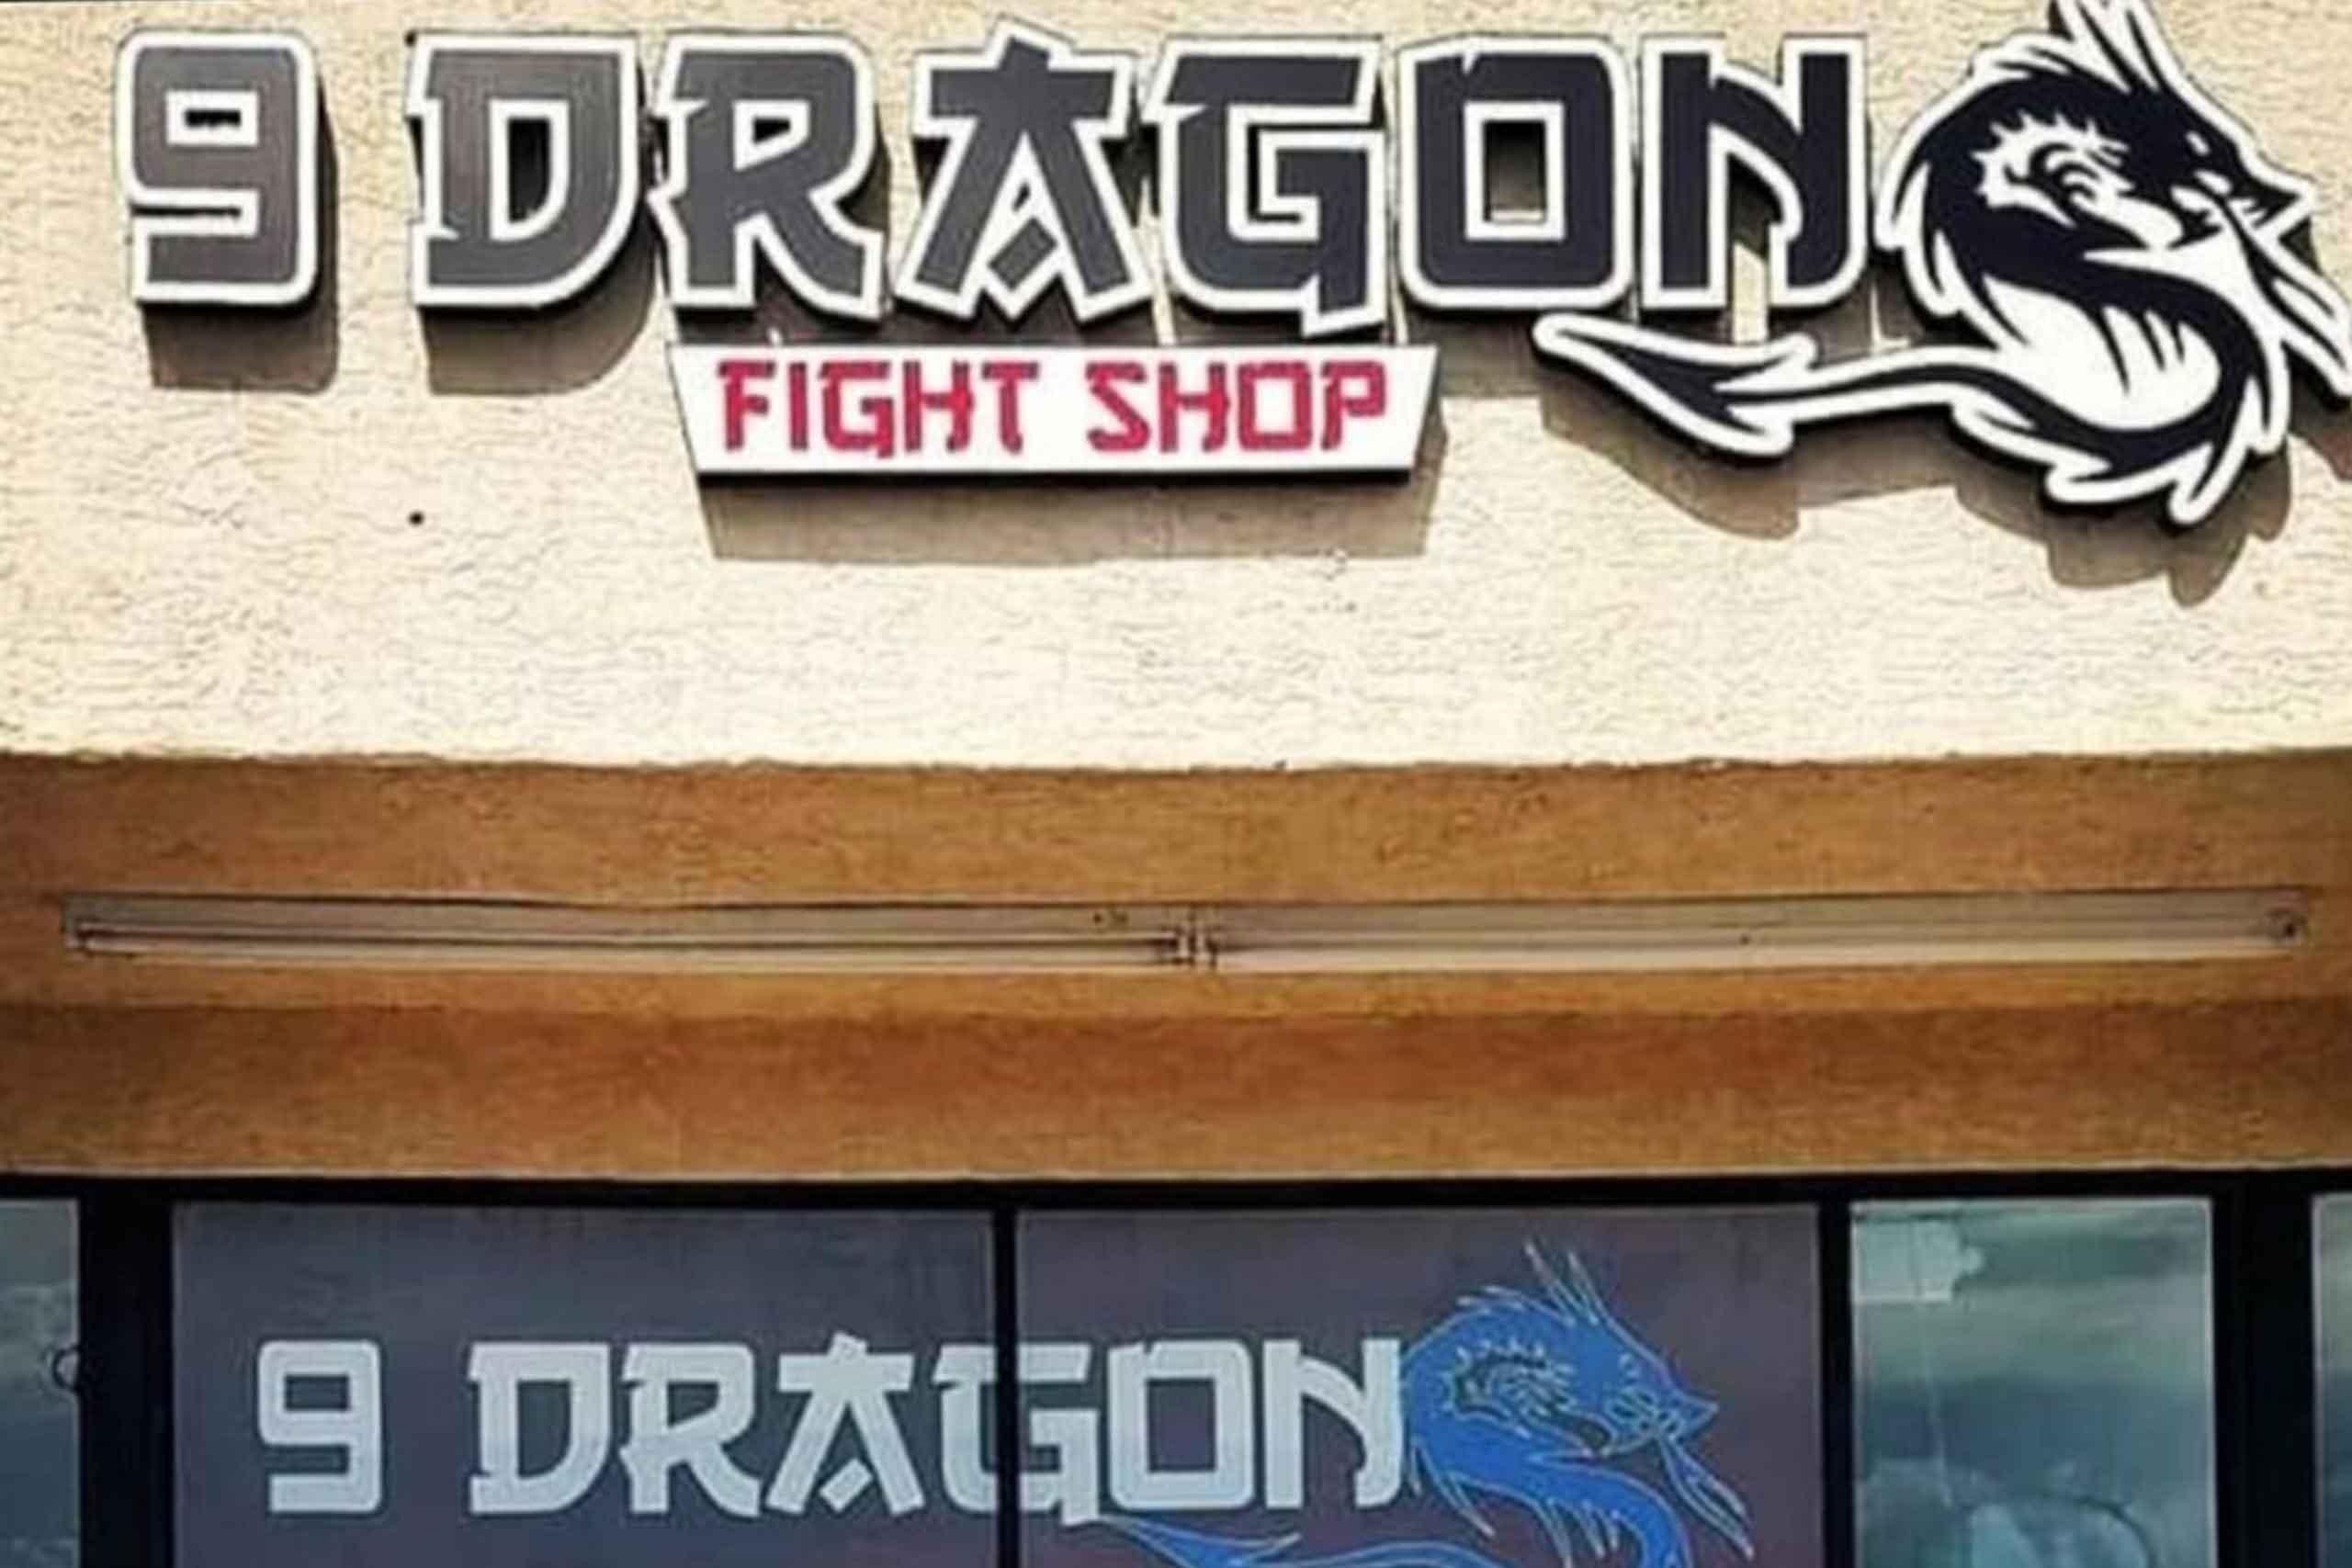 9 dragons fight shop las vegas